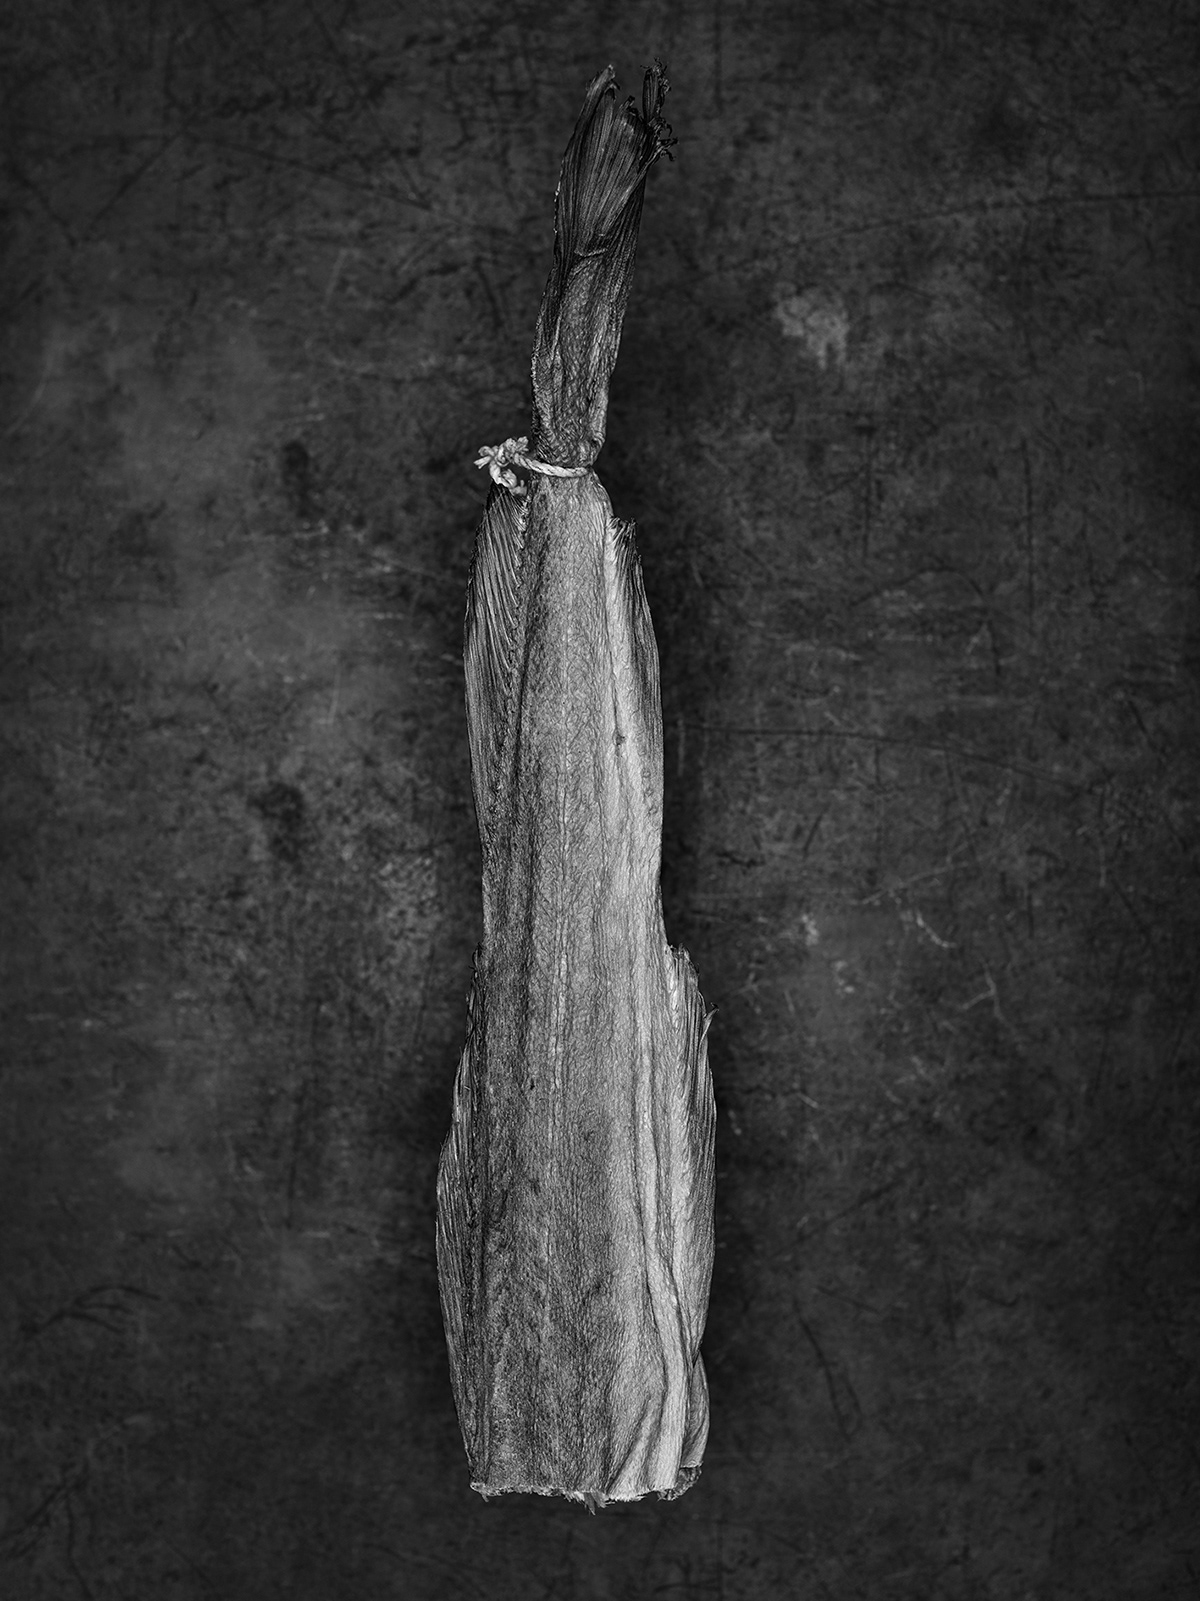 b&w bones fine art photography fish memento mori shell skull snail still life